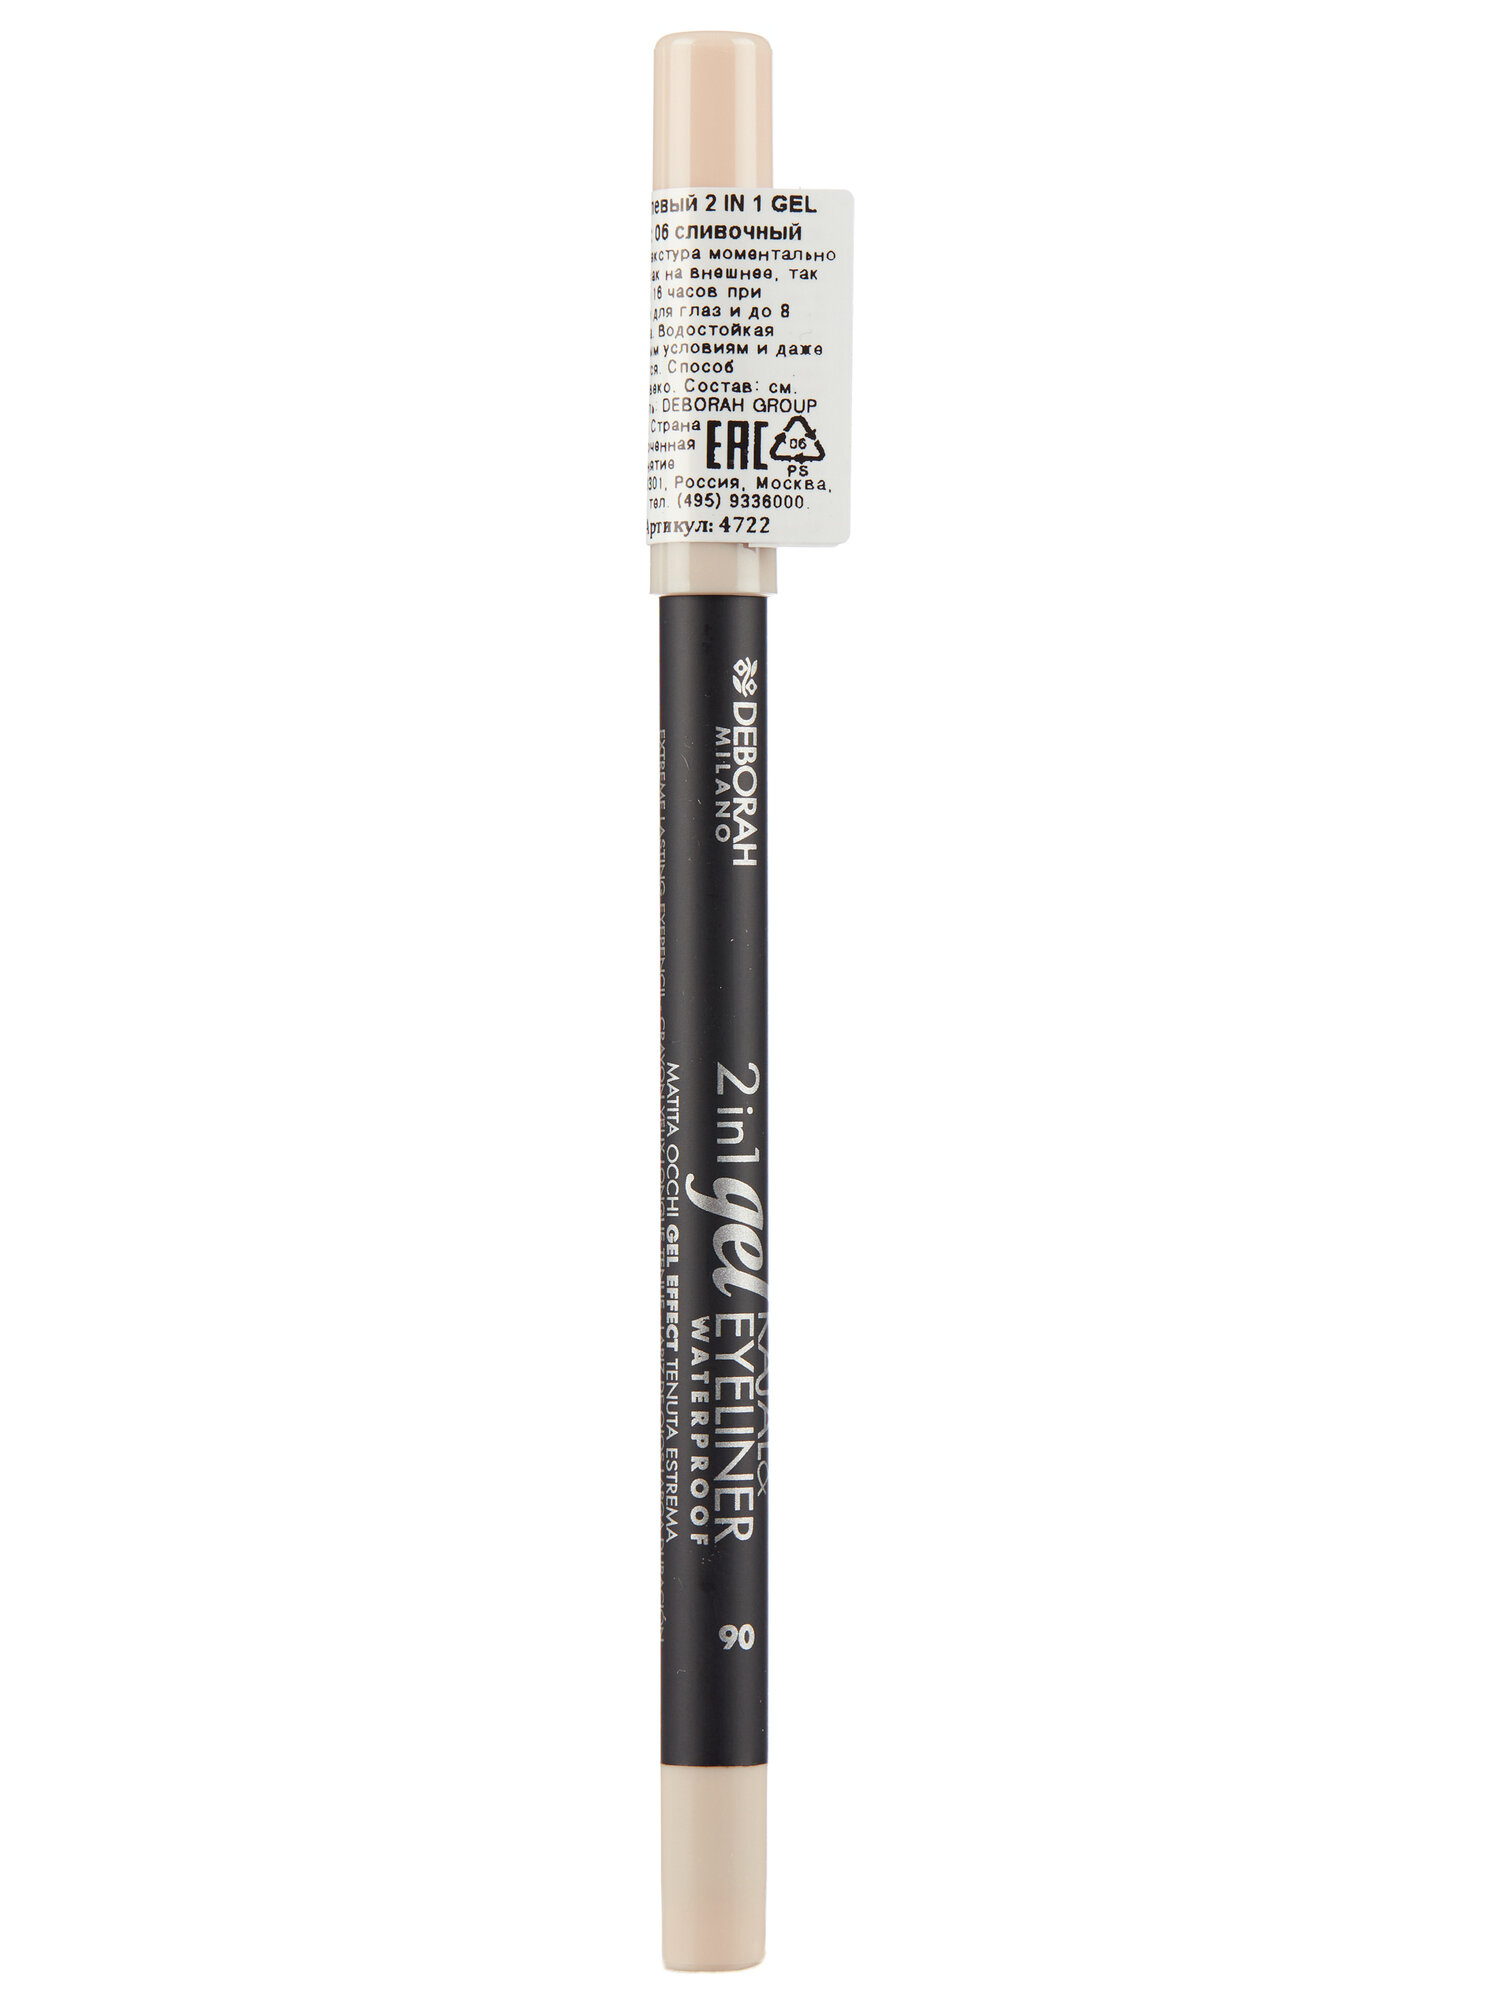 DEBORAH MILANO Карандаш для век гелевый 2 in 1 Gel Kajal & Eyeliner Pencil, 1,4 г, 06 Сливочный